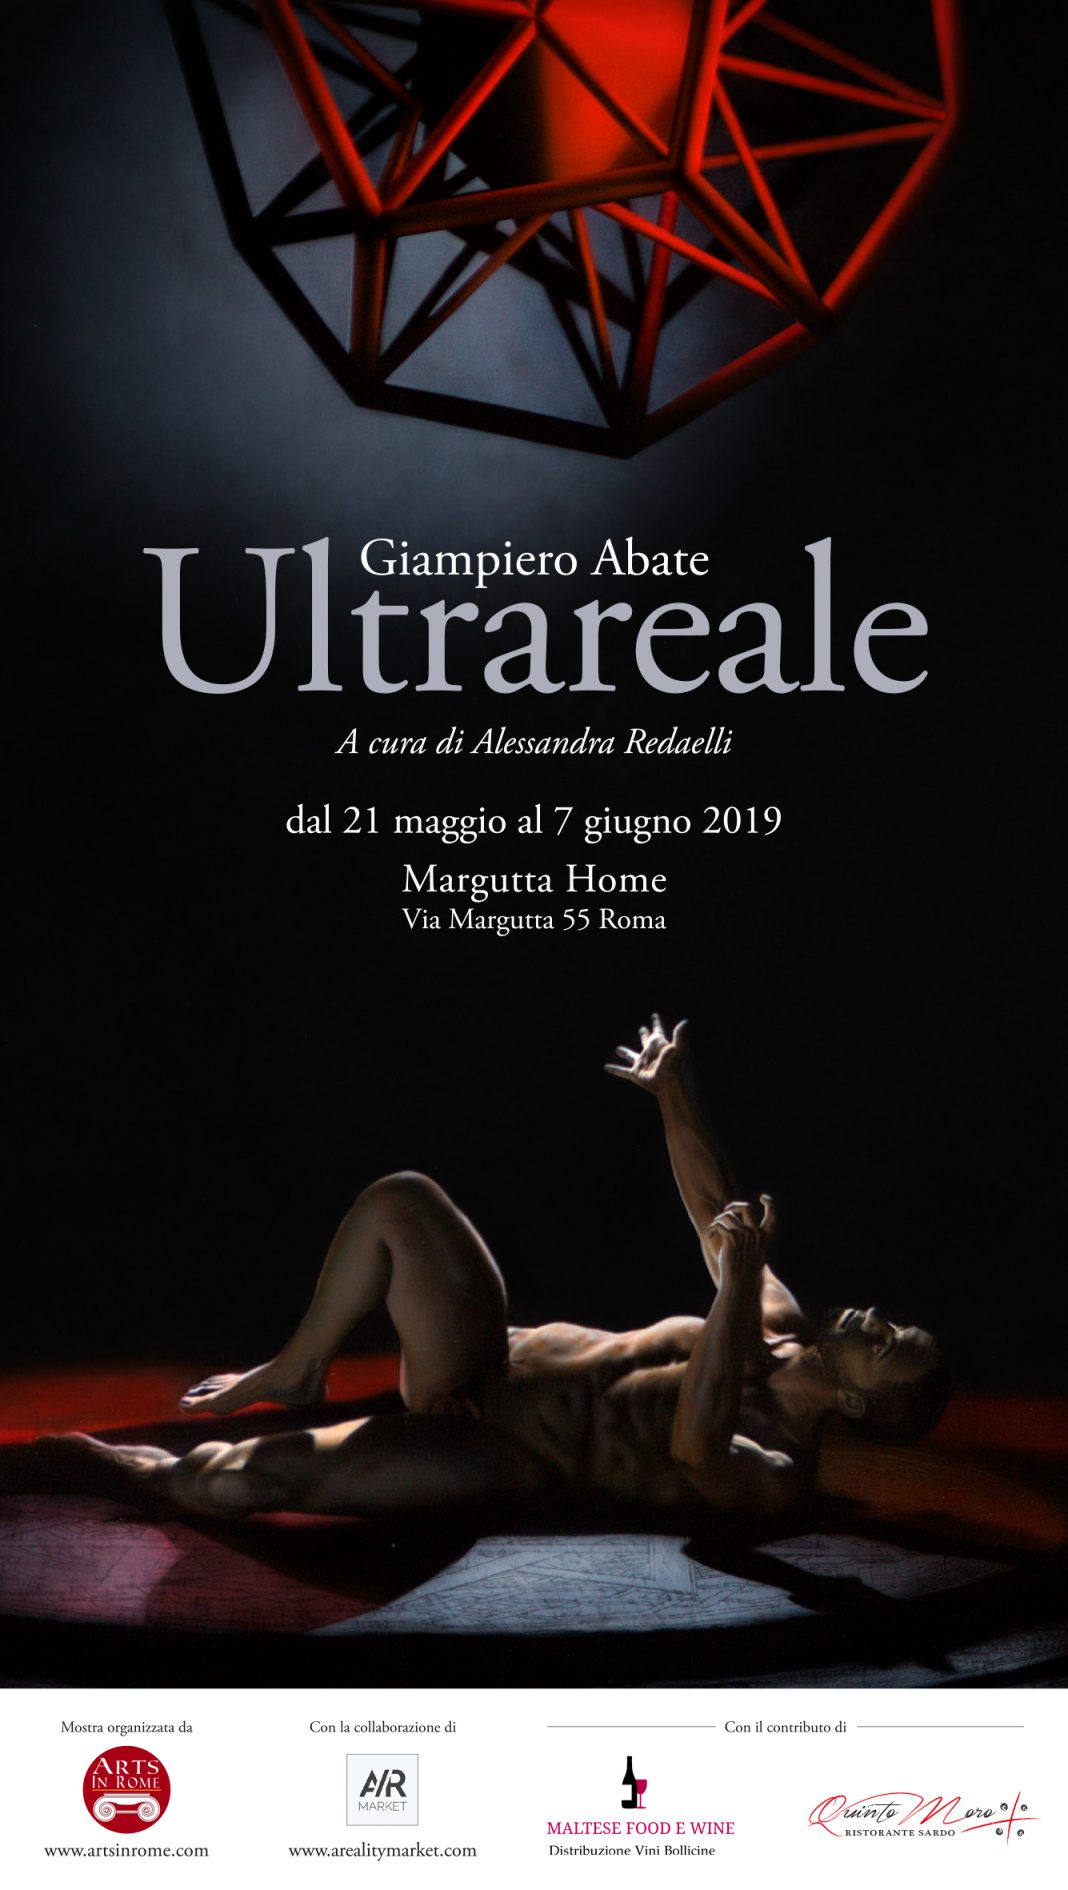 Giampiero Abate – Ultrarealehttps://www.exibart.com/repository/media/eventi/2019/05/giampiero-abate-8211-ultrareale-1068x1890.jpg